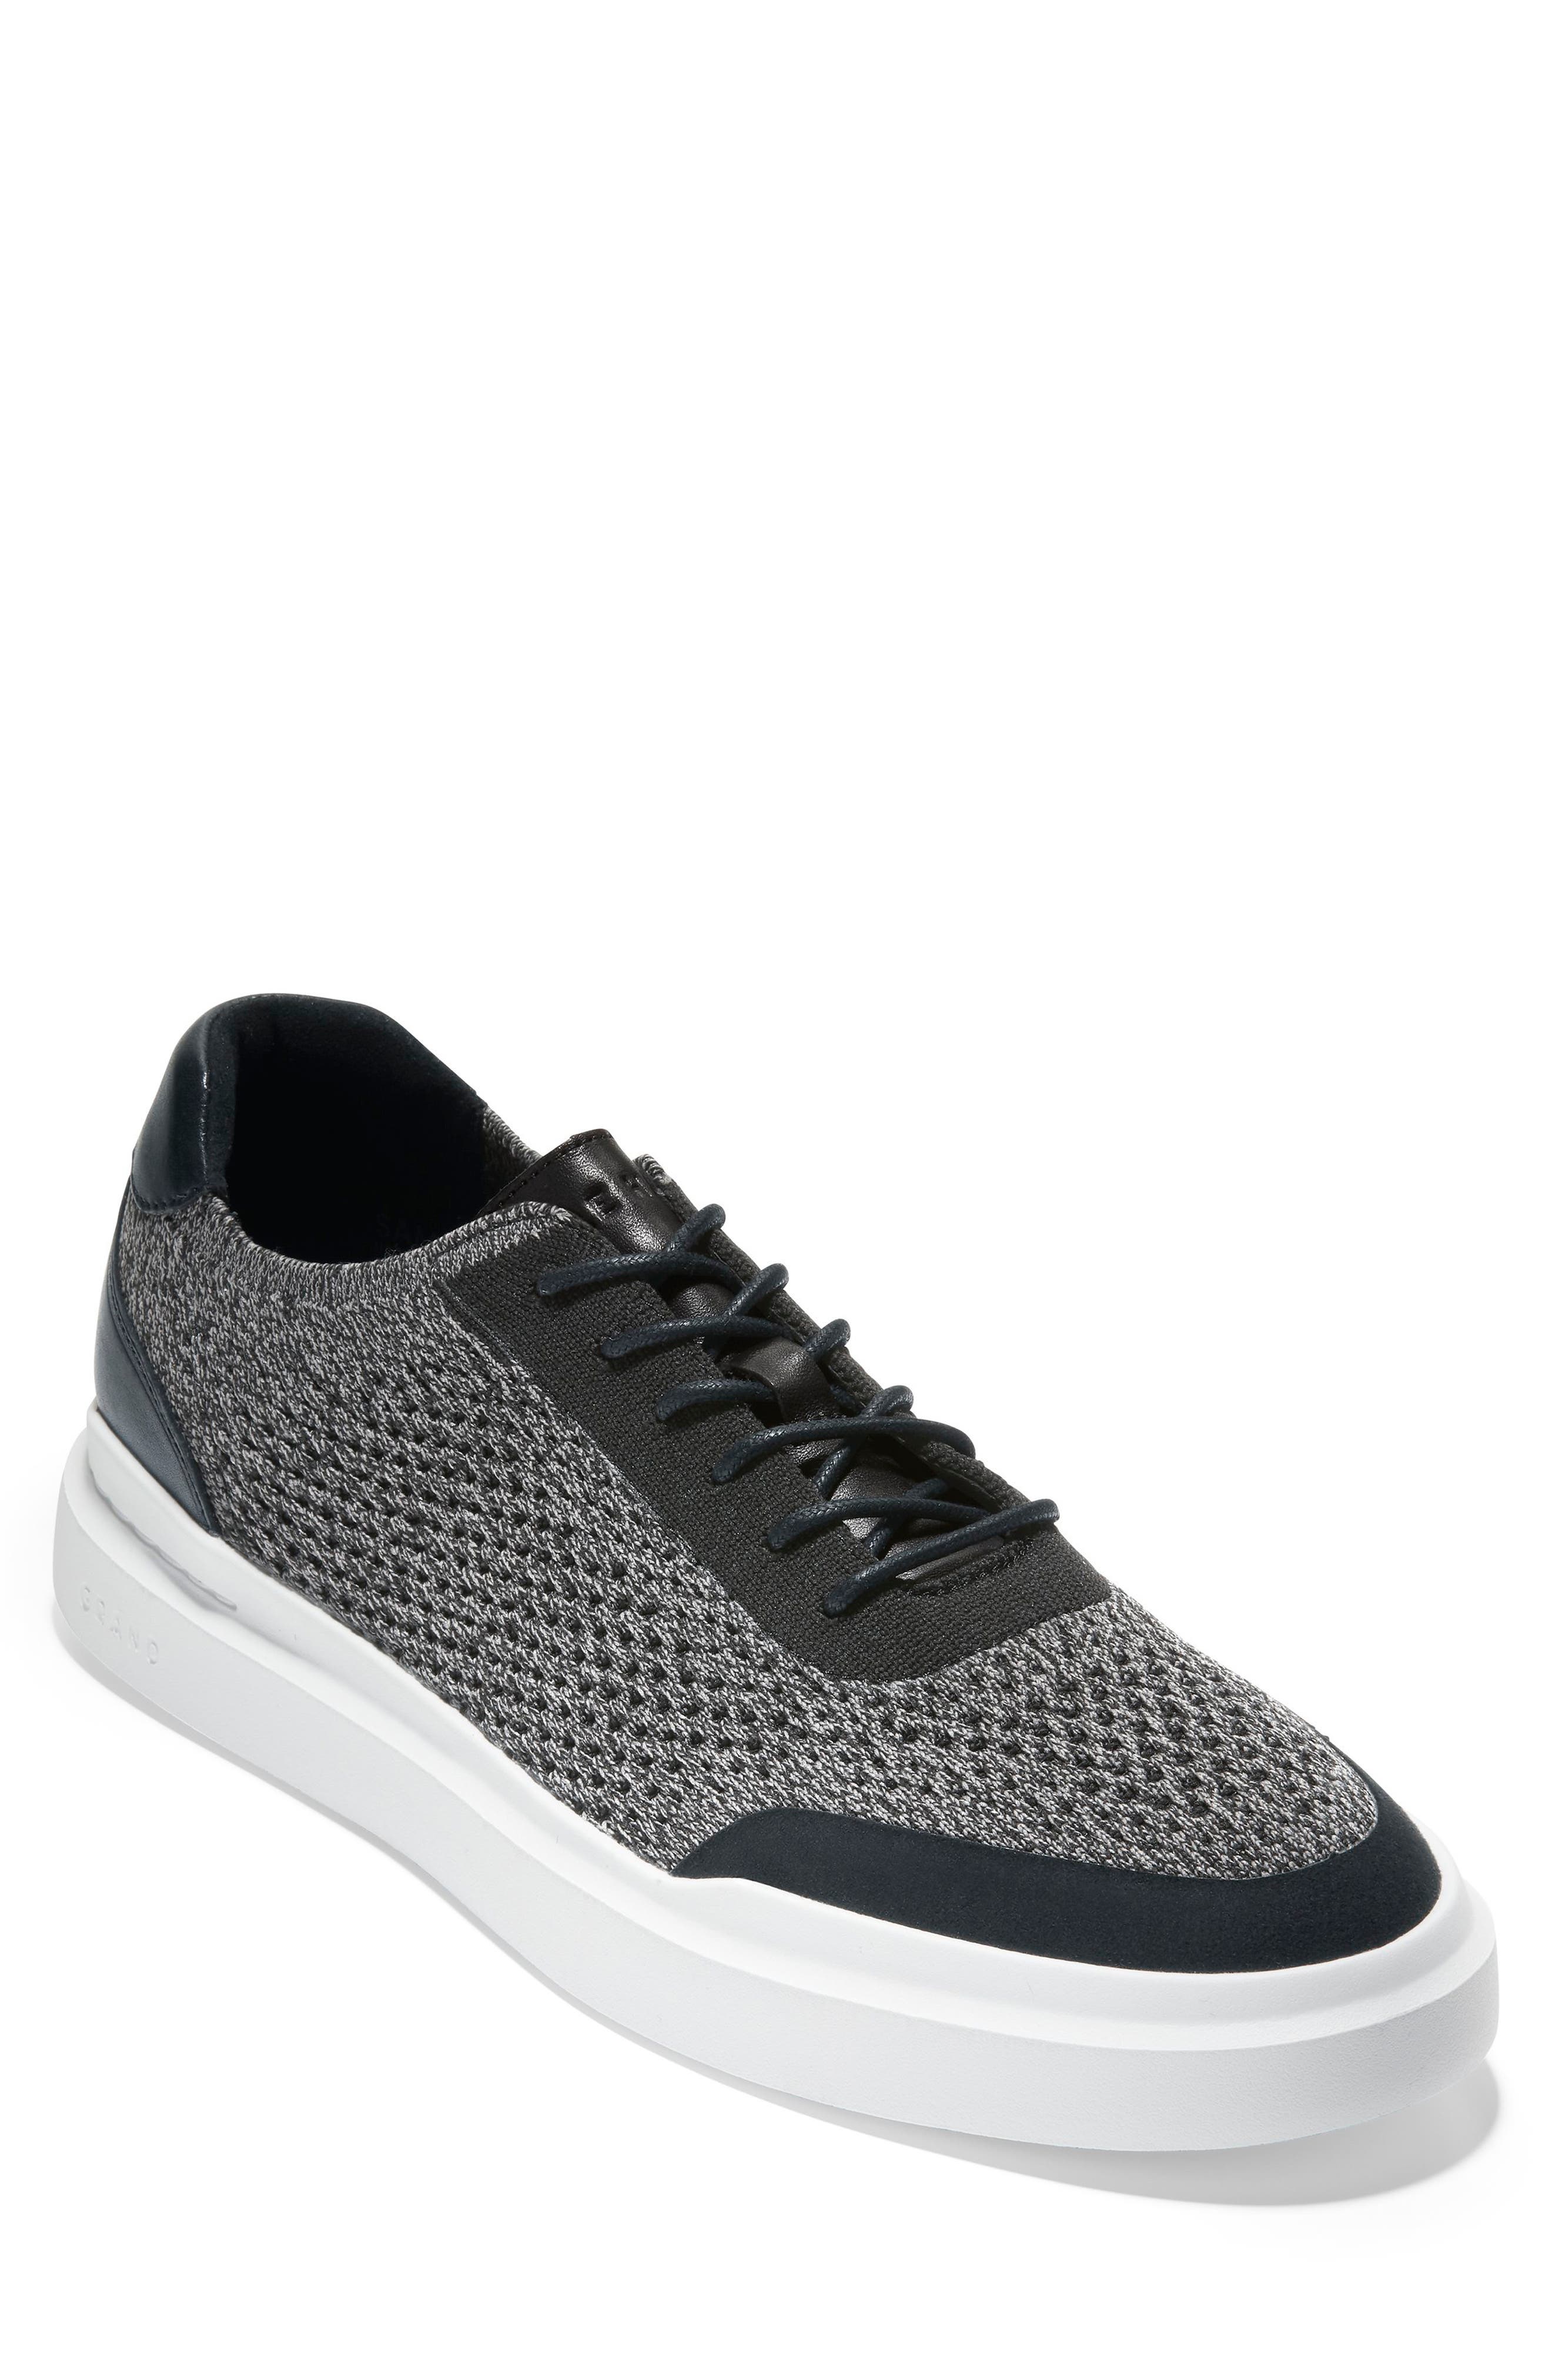 Cole Haan Men's Grandpro Stitchlite Tennis Sneakers Lace Up Comfort Shoes 